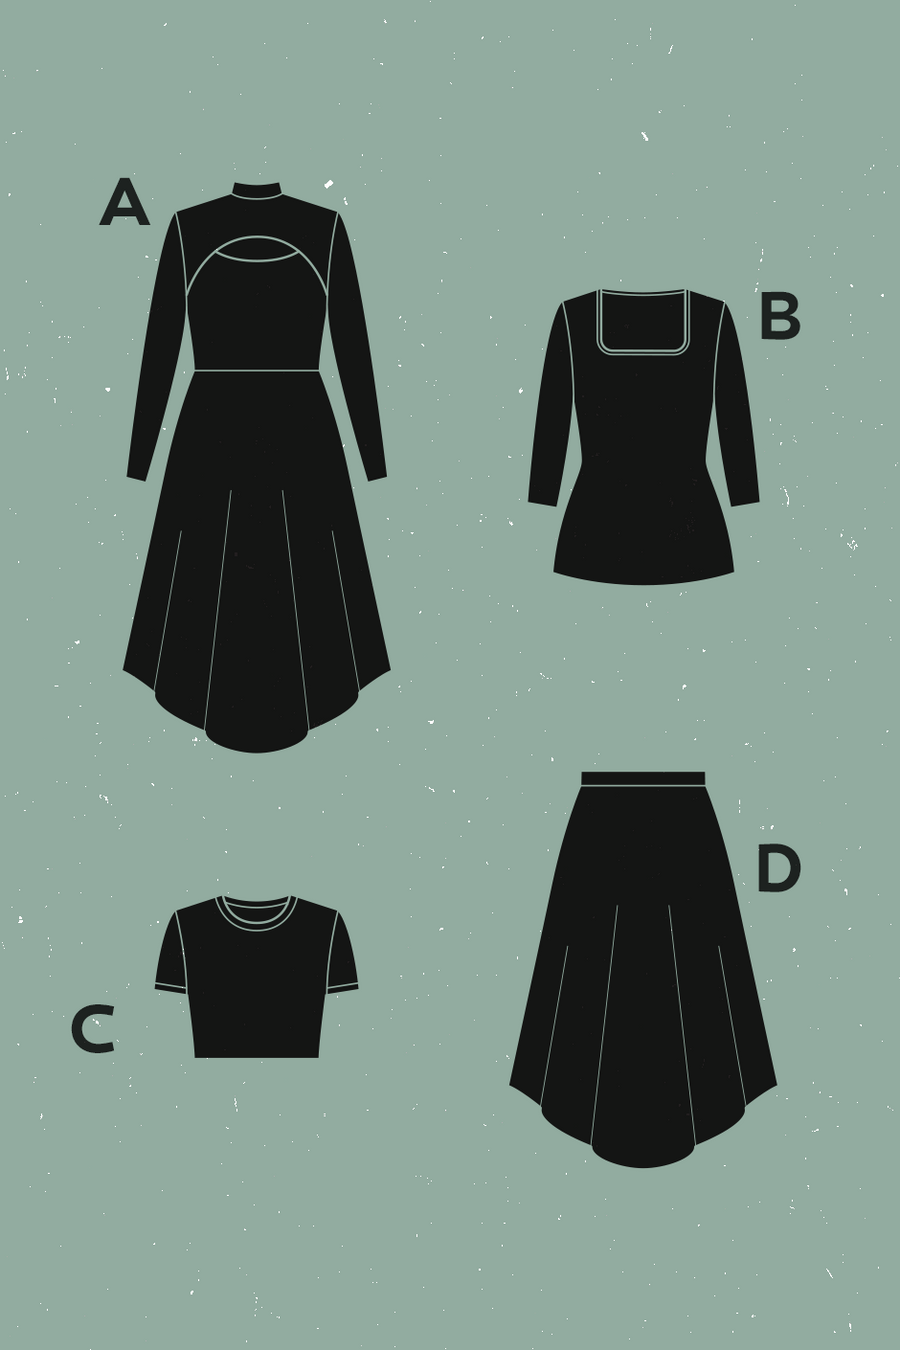 Orage Dress, Top + Skirt Pattern | Patron de Robe, Haut + Jupe Orage | Deer & Doe